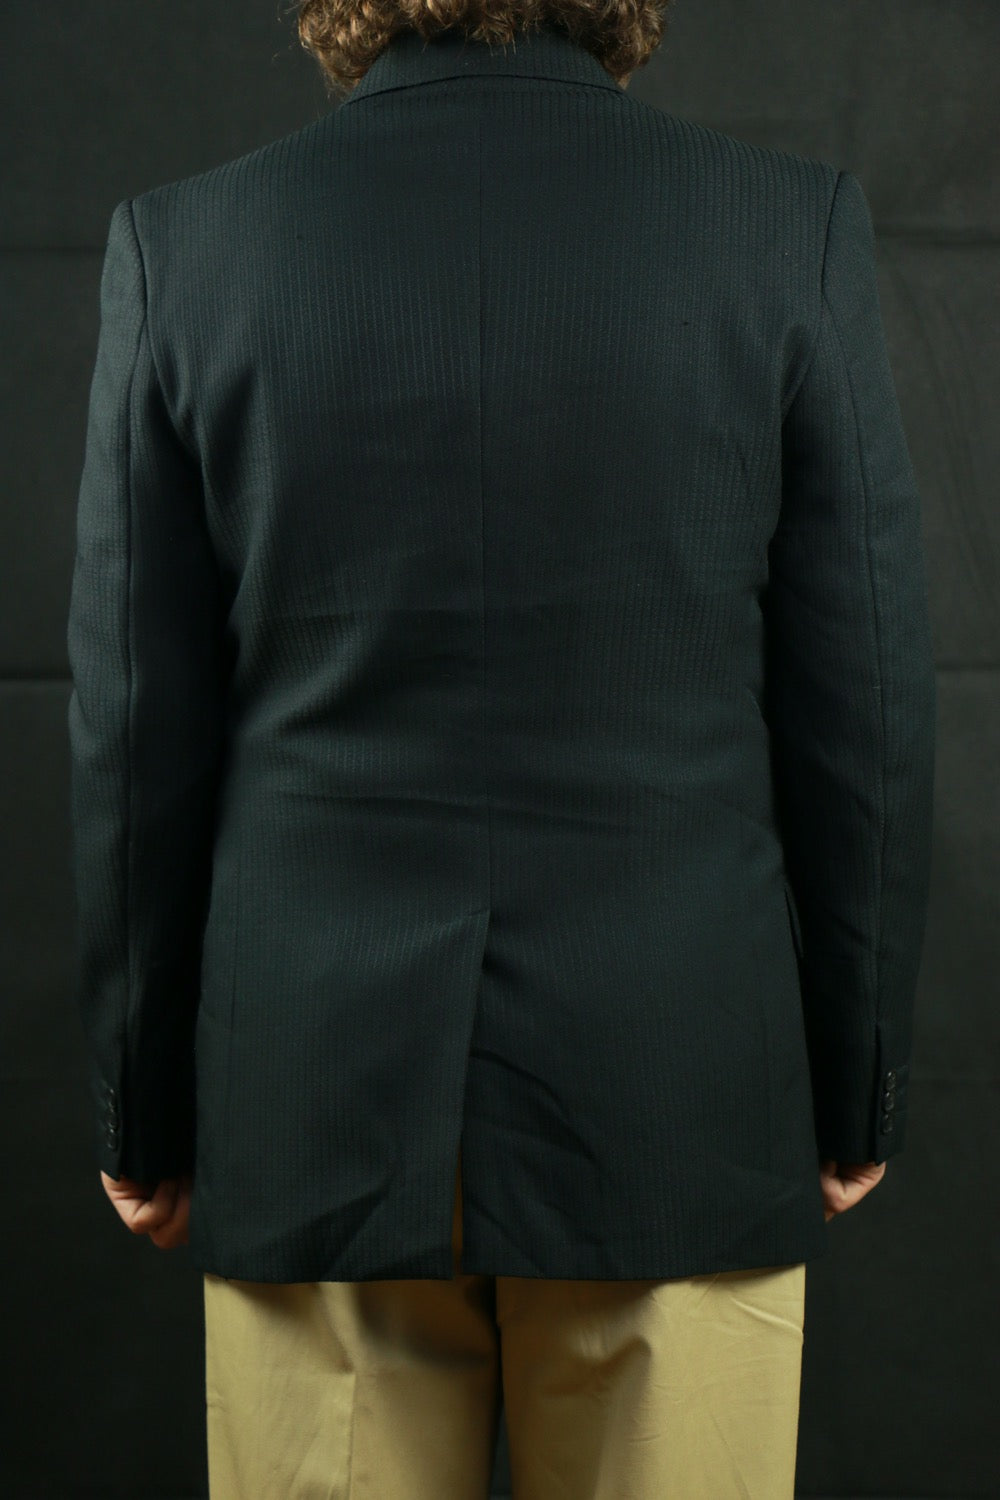 Wiston & Clark Suit Jacket, clochard92.com